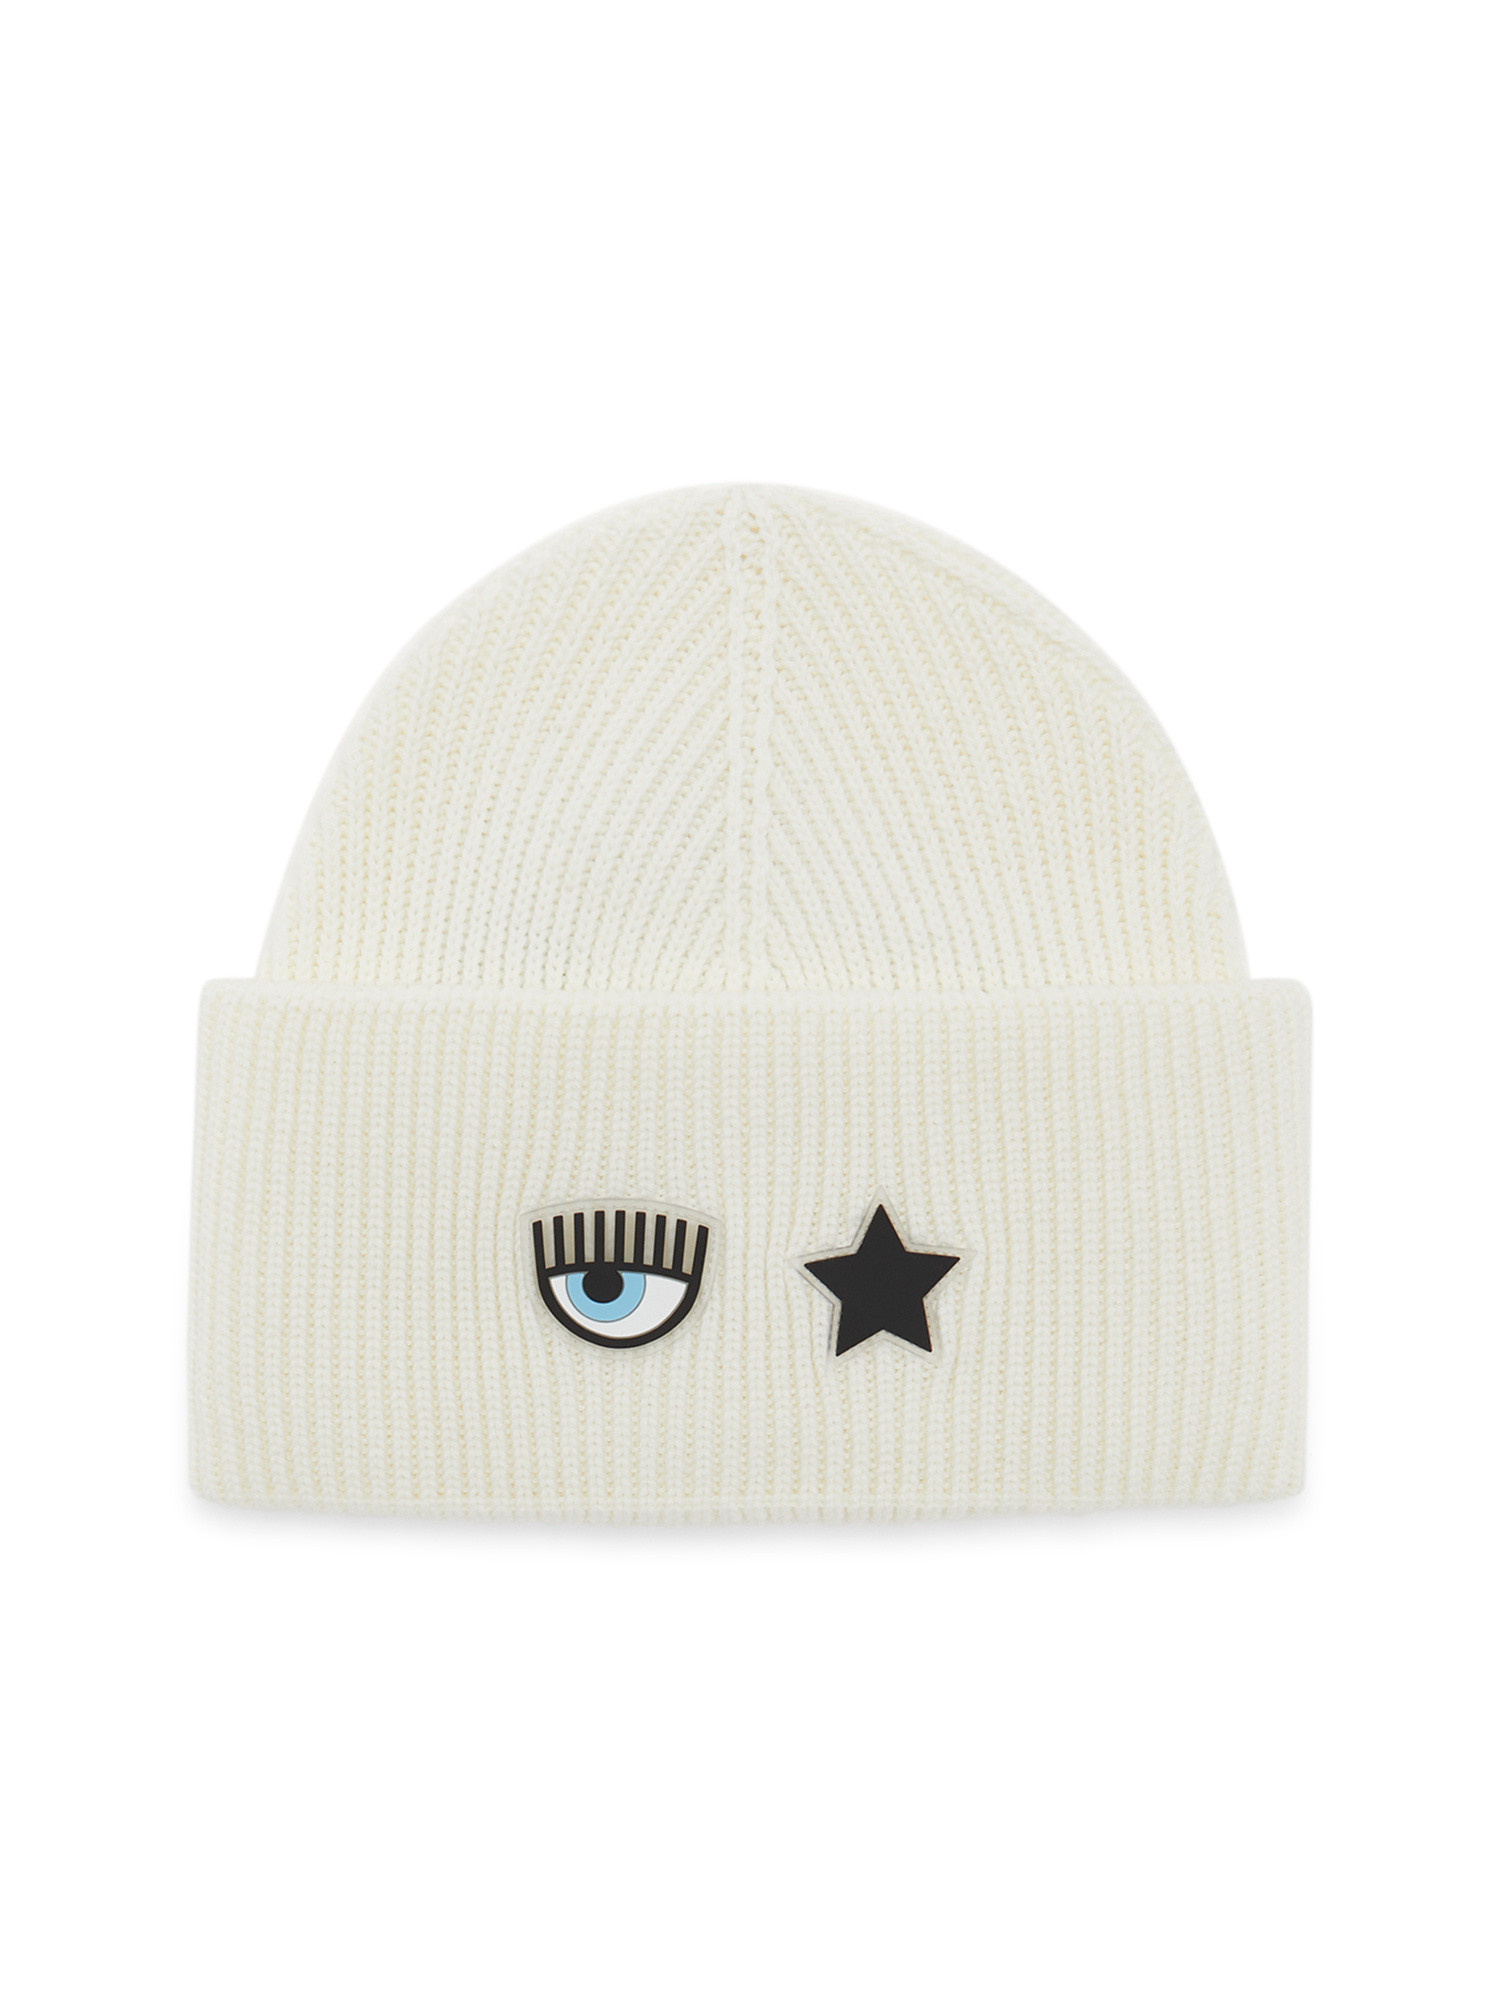 Chiara Ferragni - Beanie hat with Eye Star logo, White, large image number 0